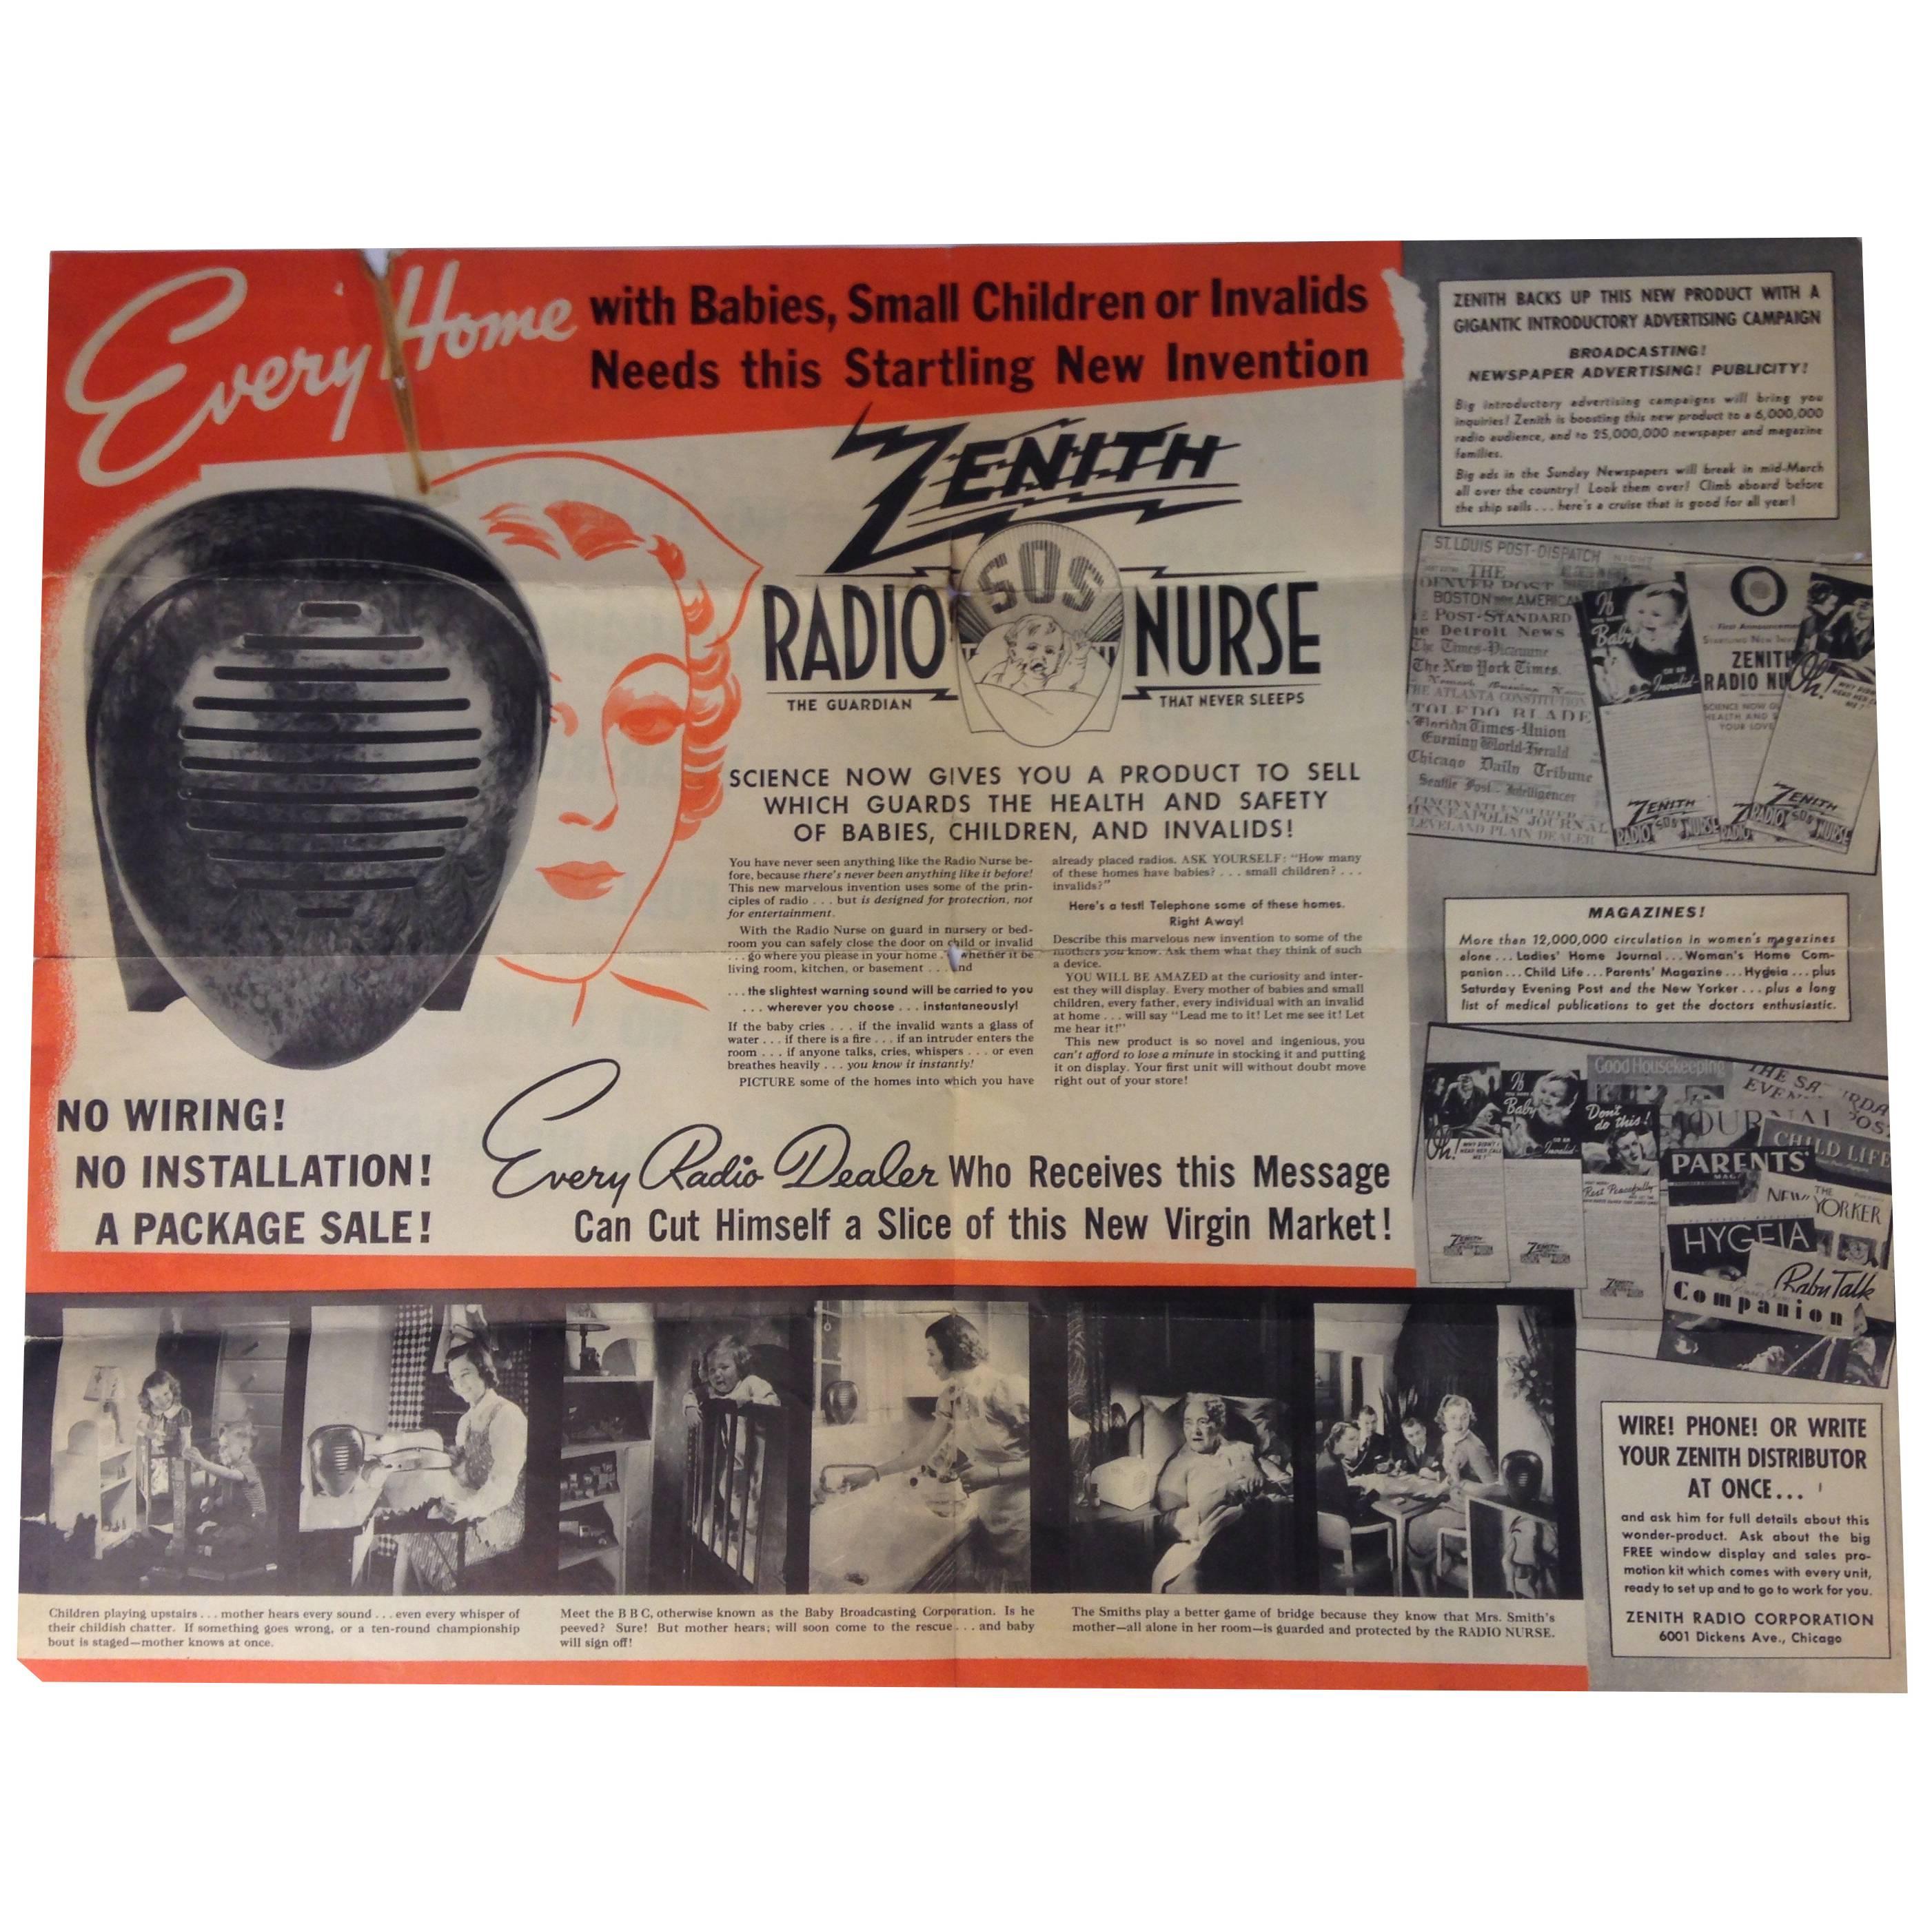 Original Brochure for Isamu Noguchi's Radio Nurse for Zenith